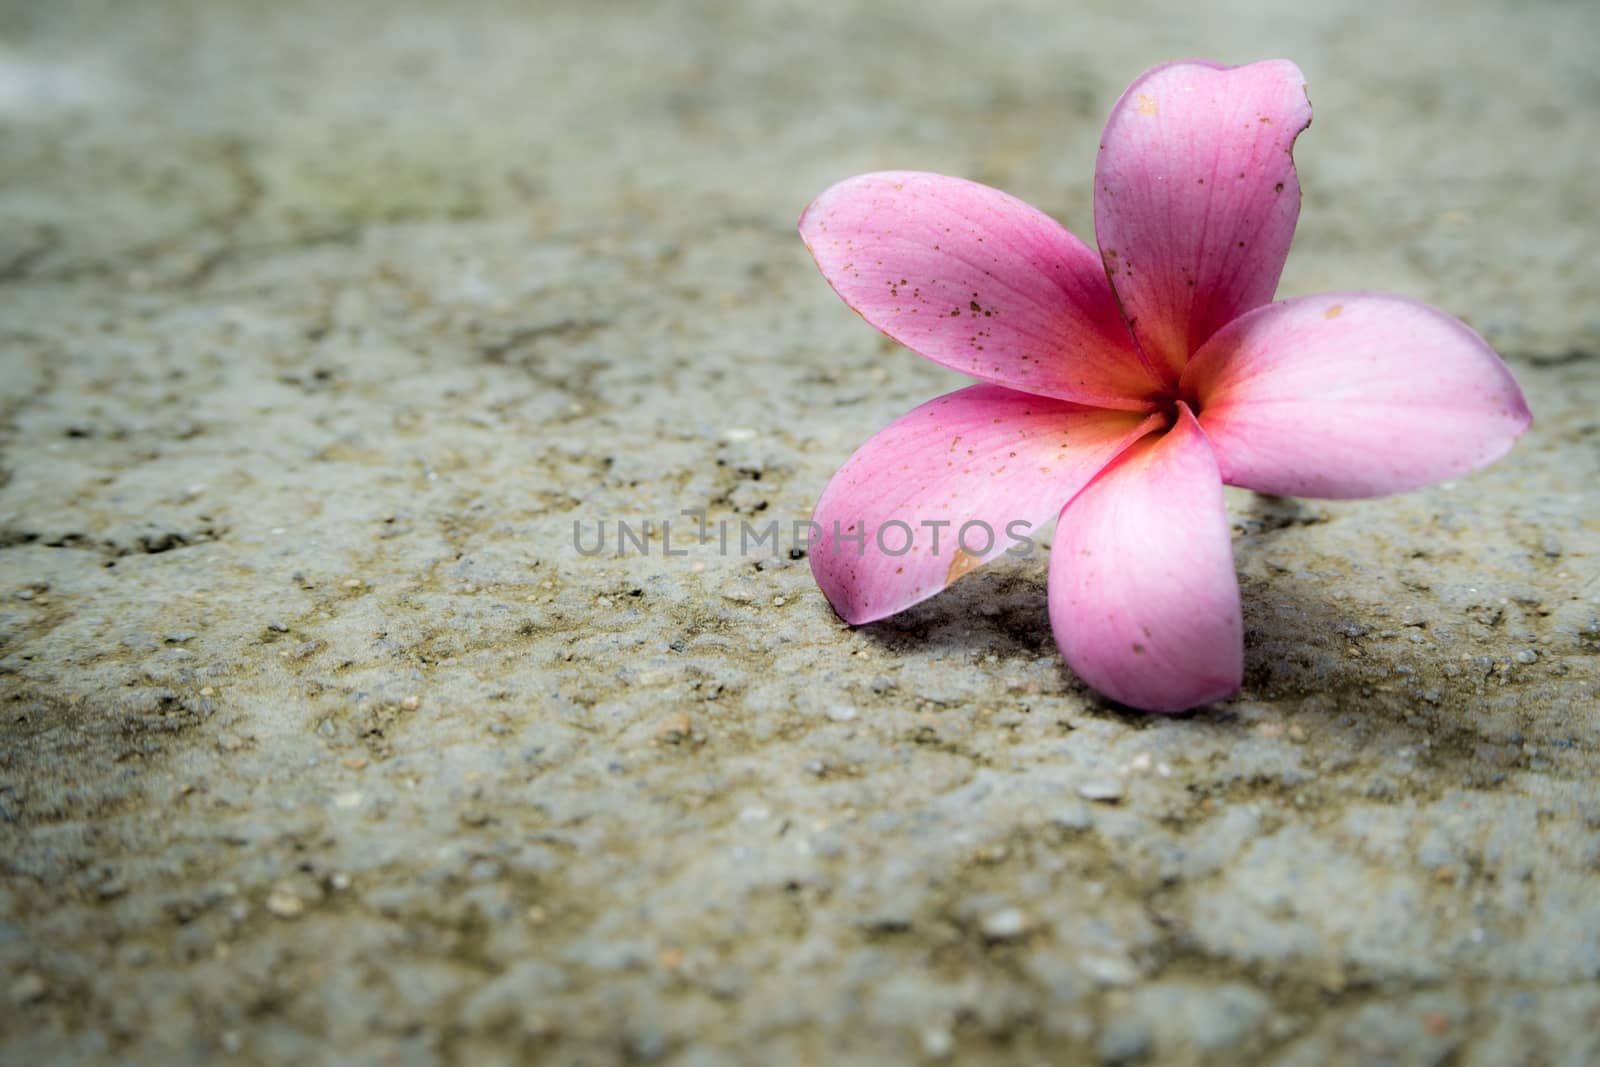 Pink flowers fall onto concrete floor by Satakorn